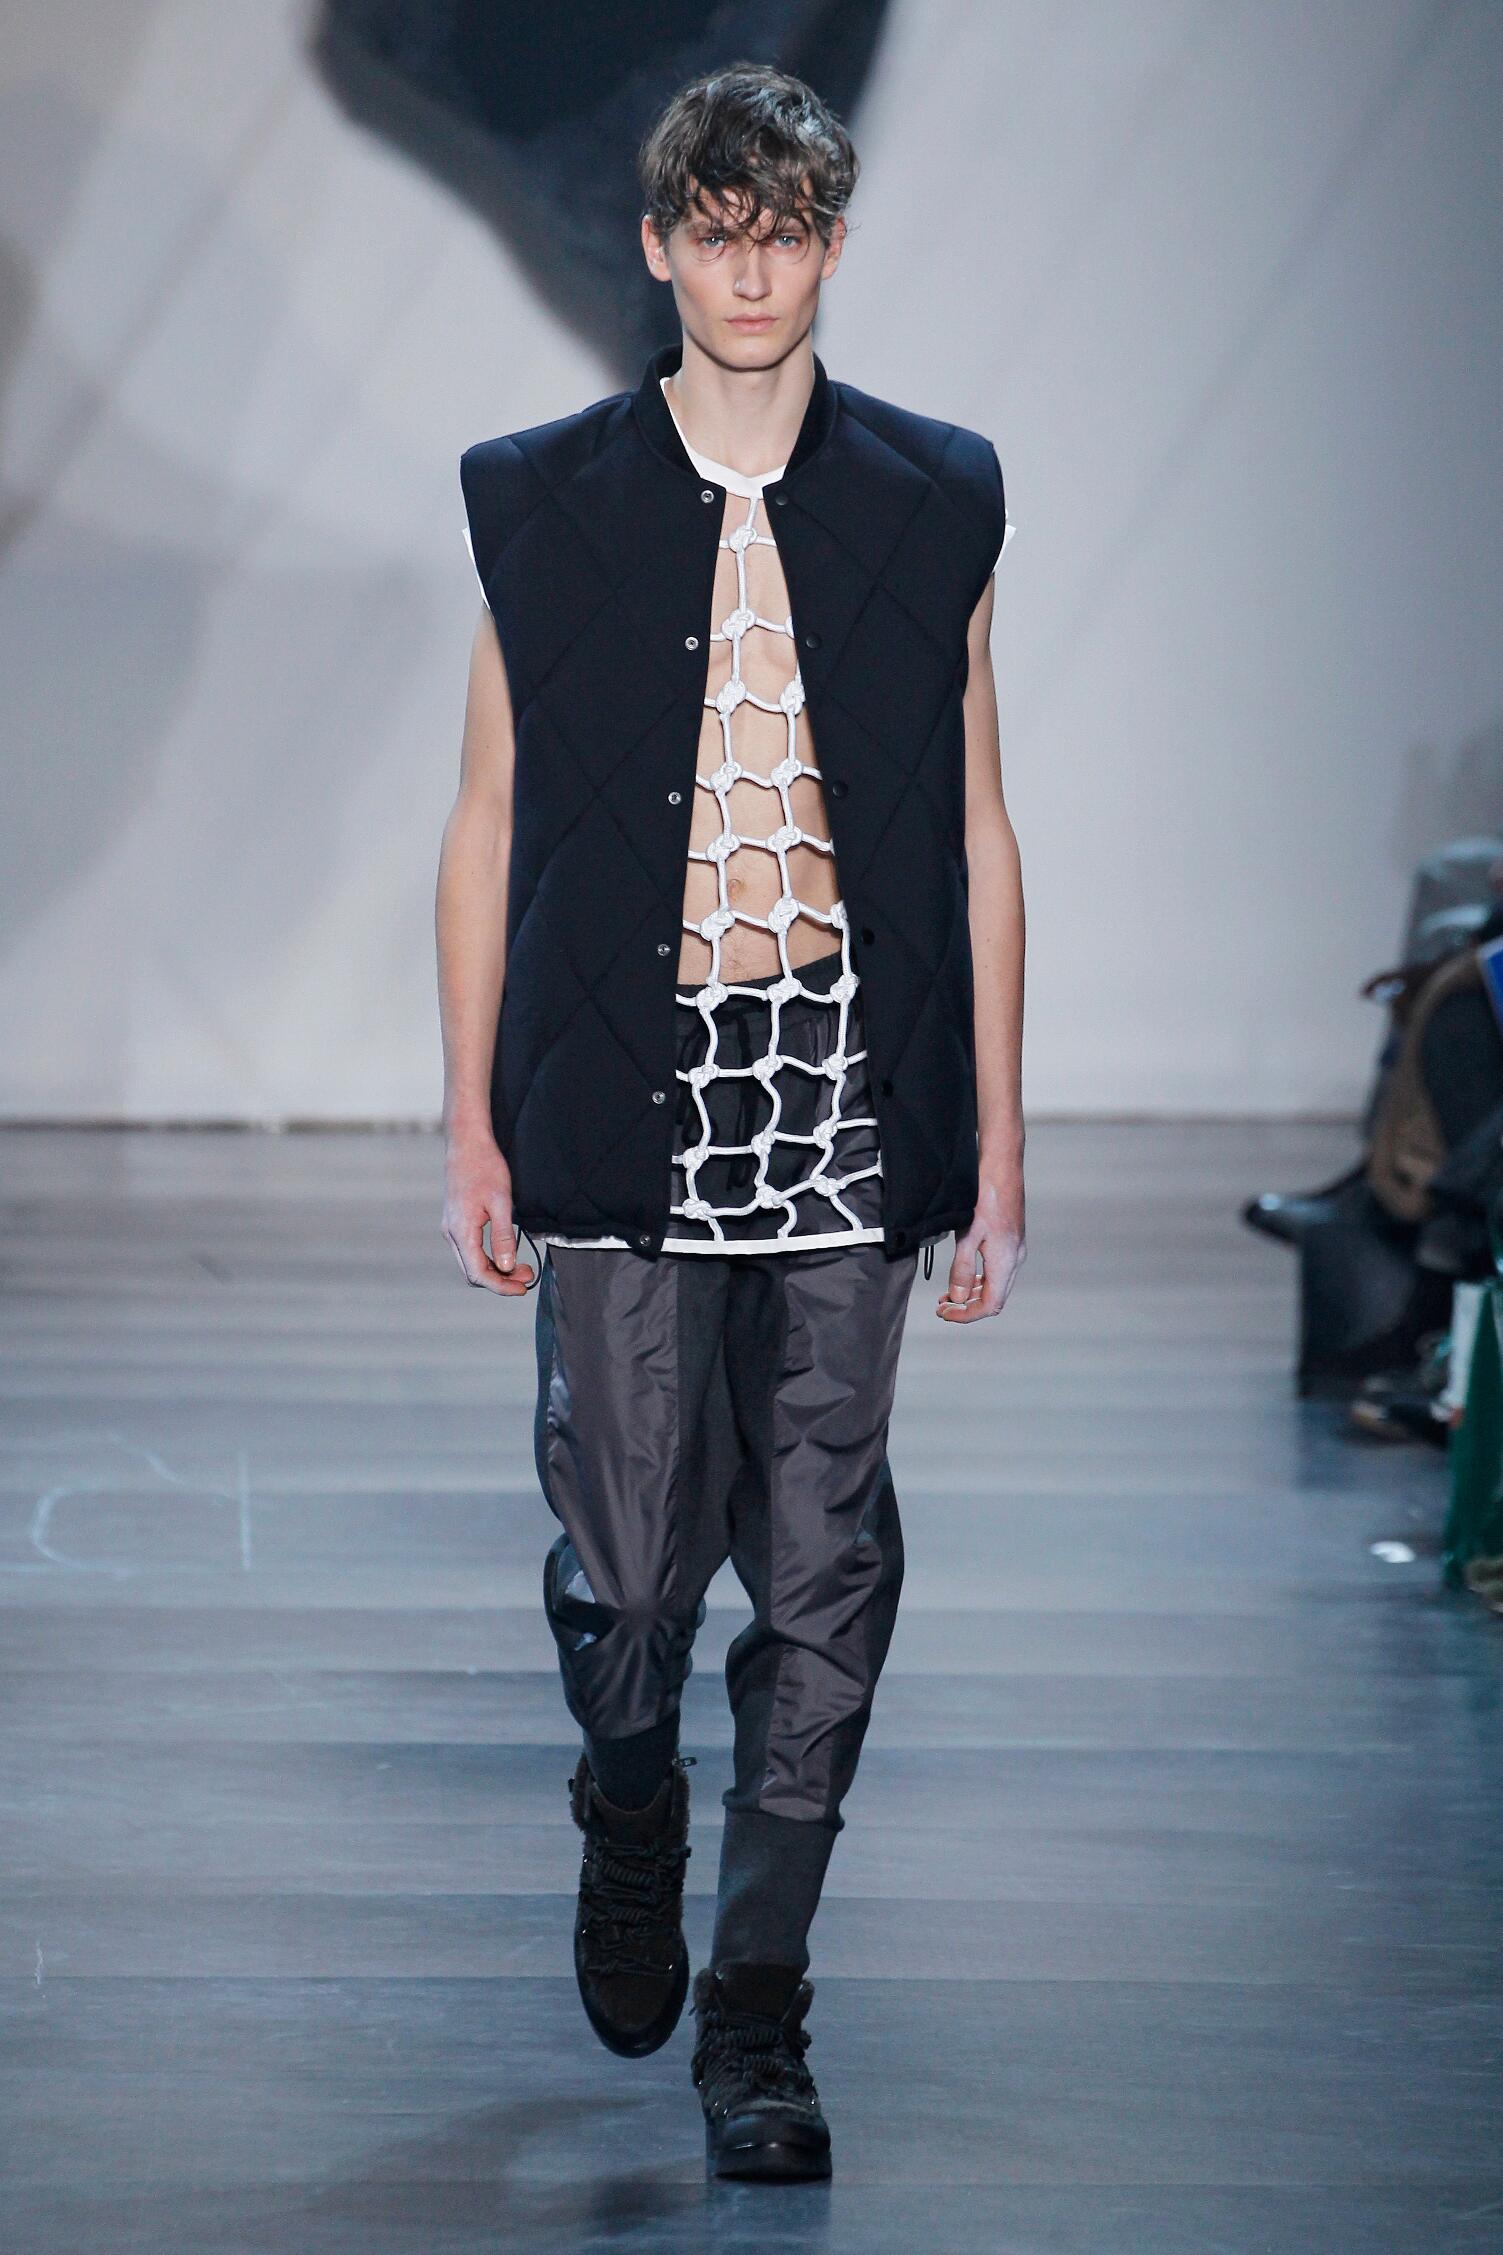 Winter 2015 Fashion Trends 3.1 Phillip Lim Collection